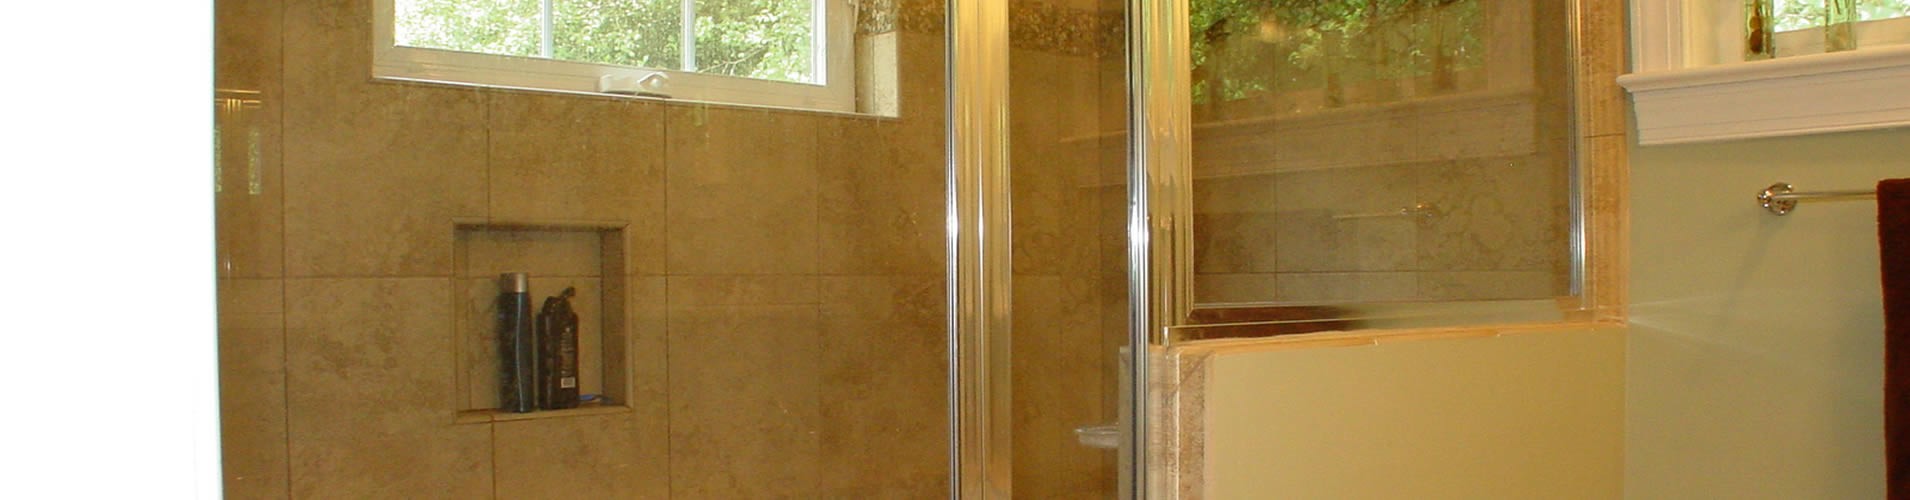 shower doors framed Buckhead Georgia